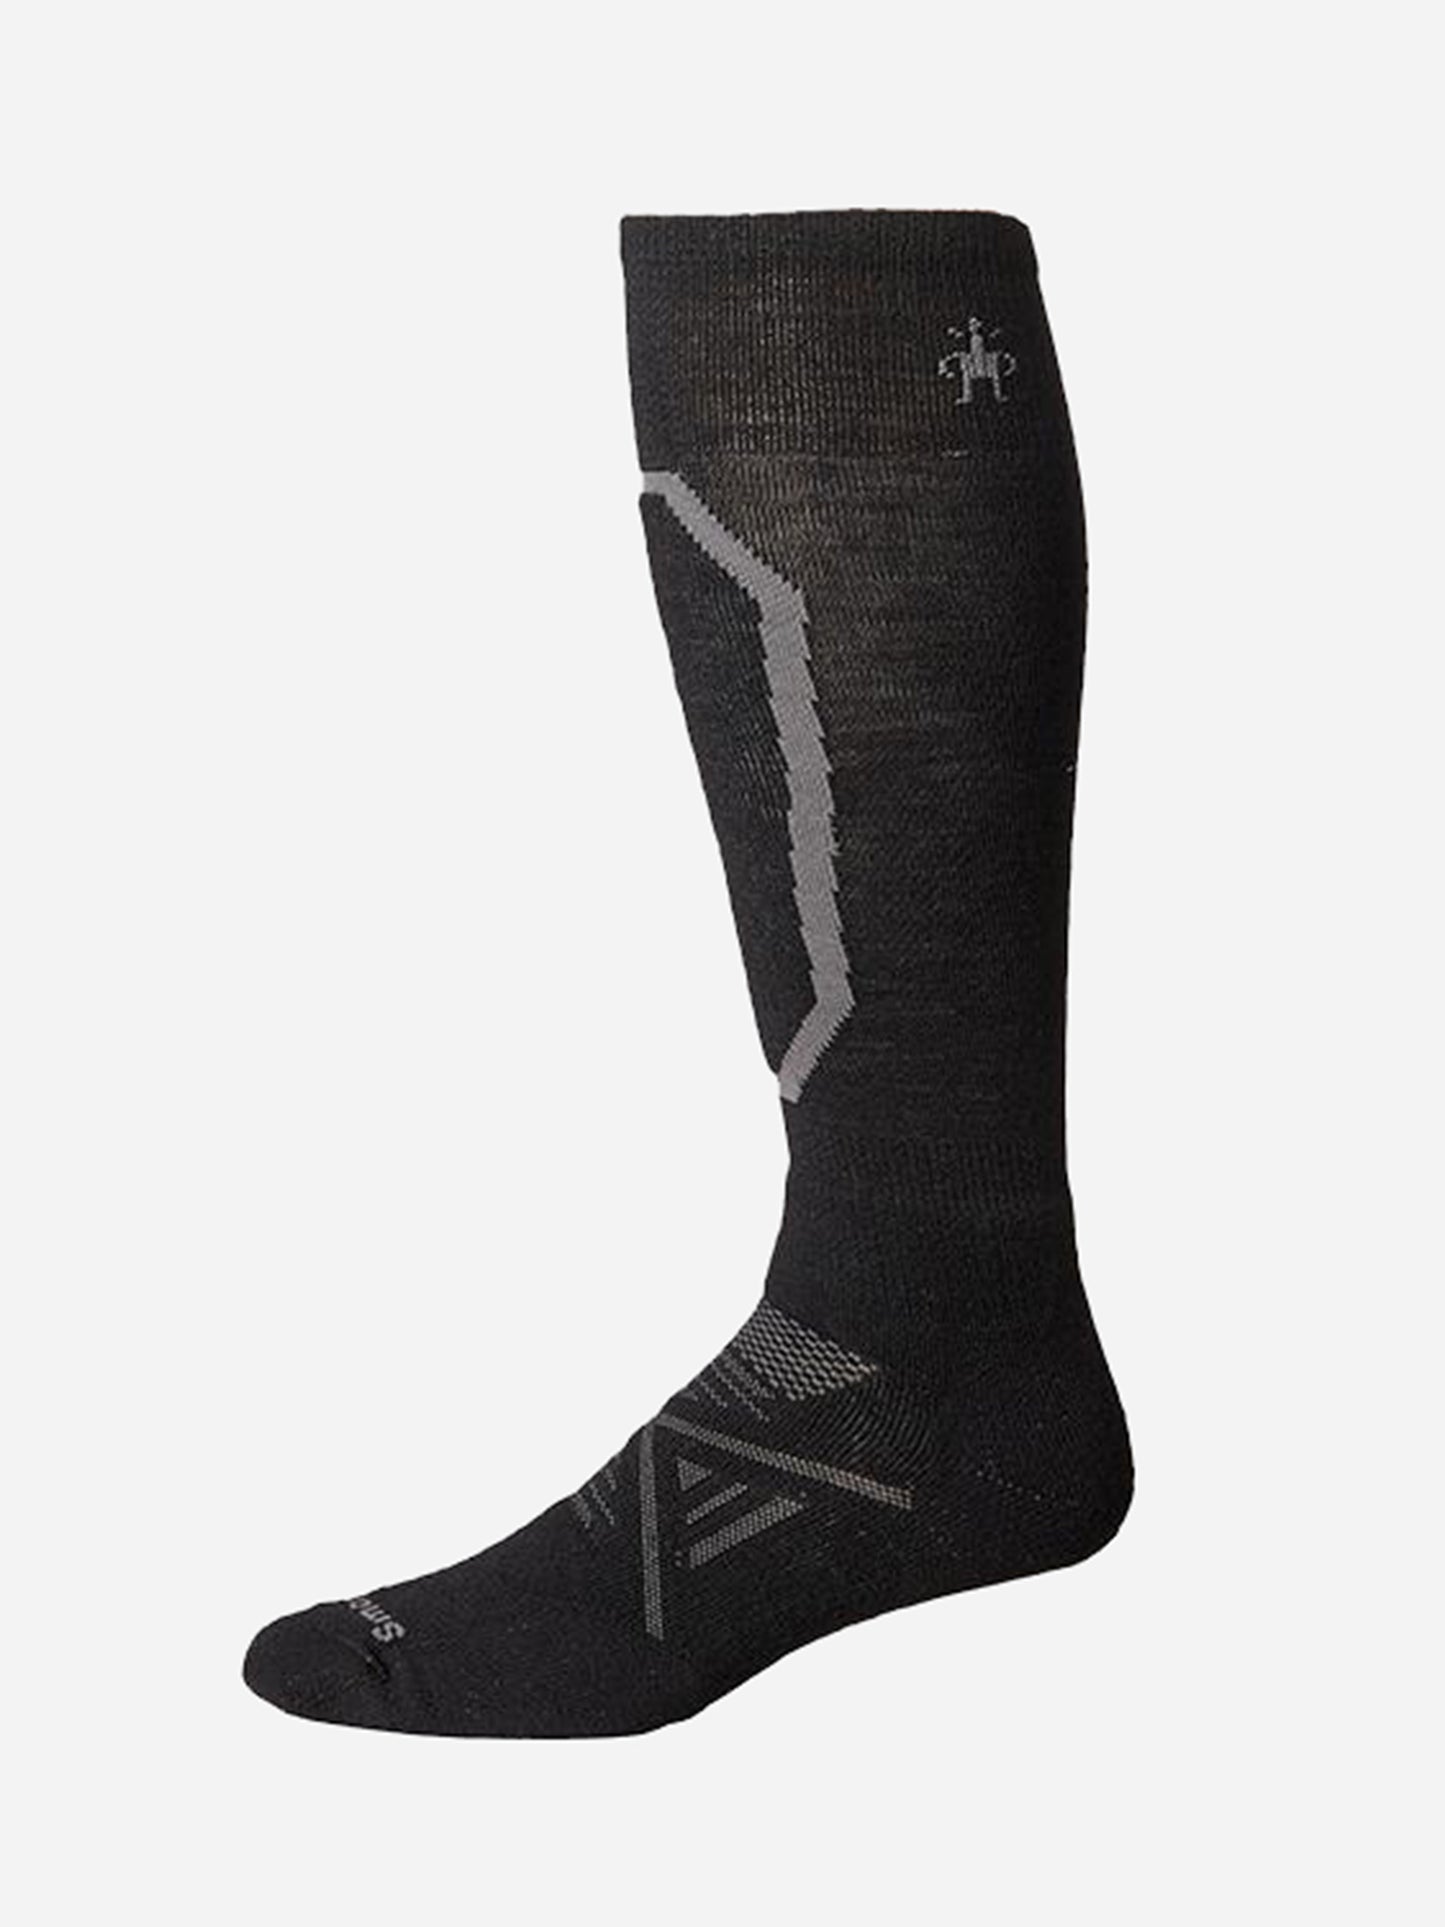 Smartwool Men's PHd Ski Medium Socks